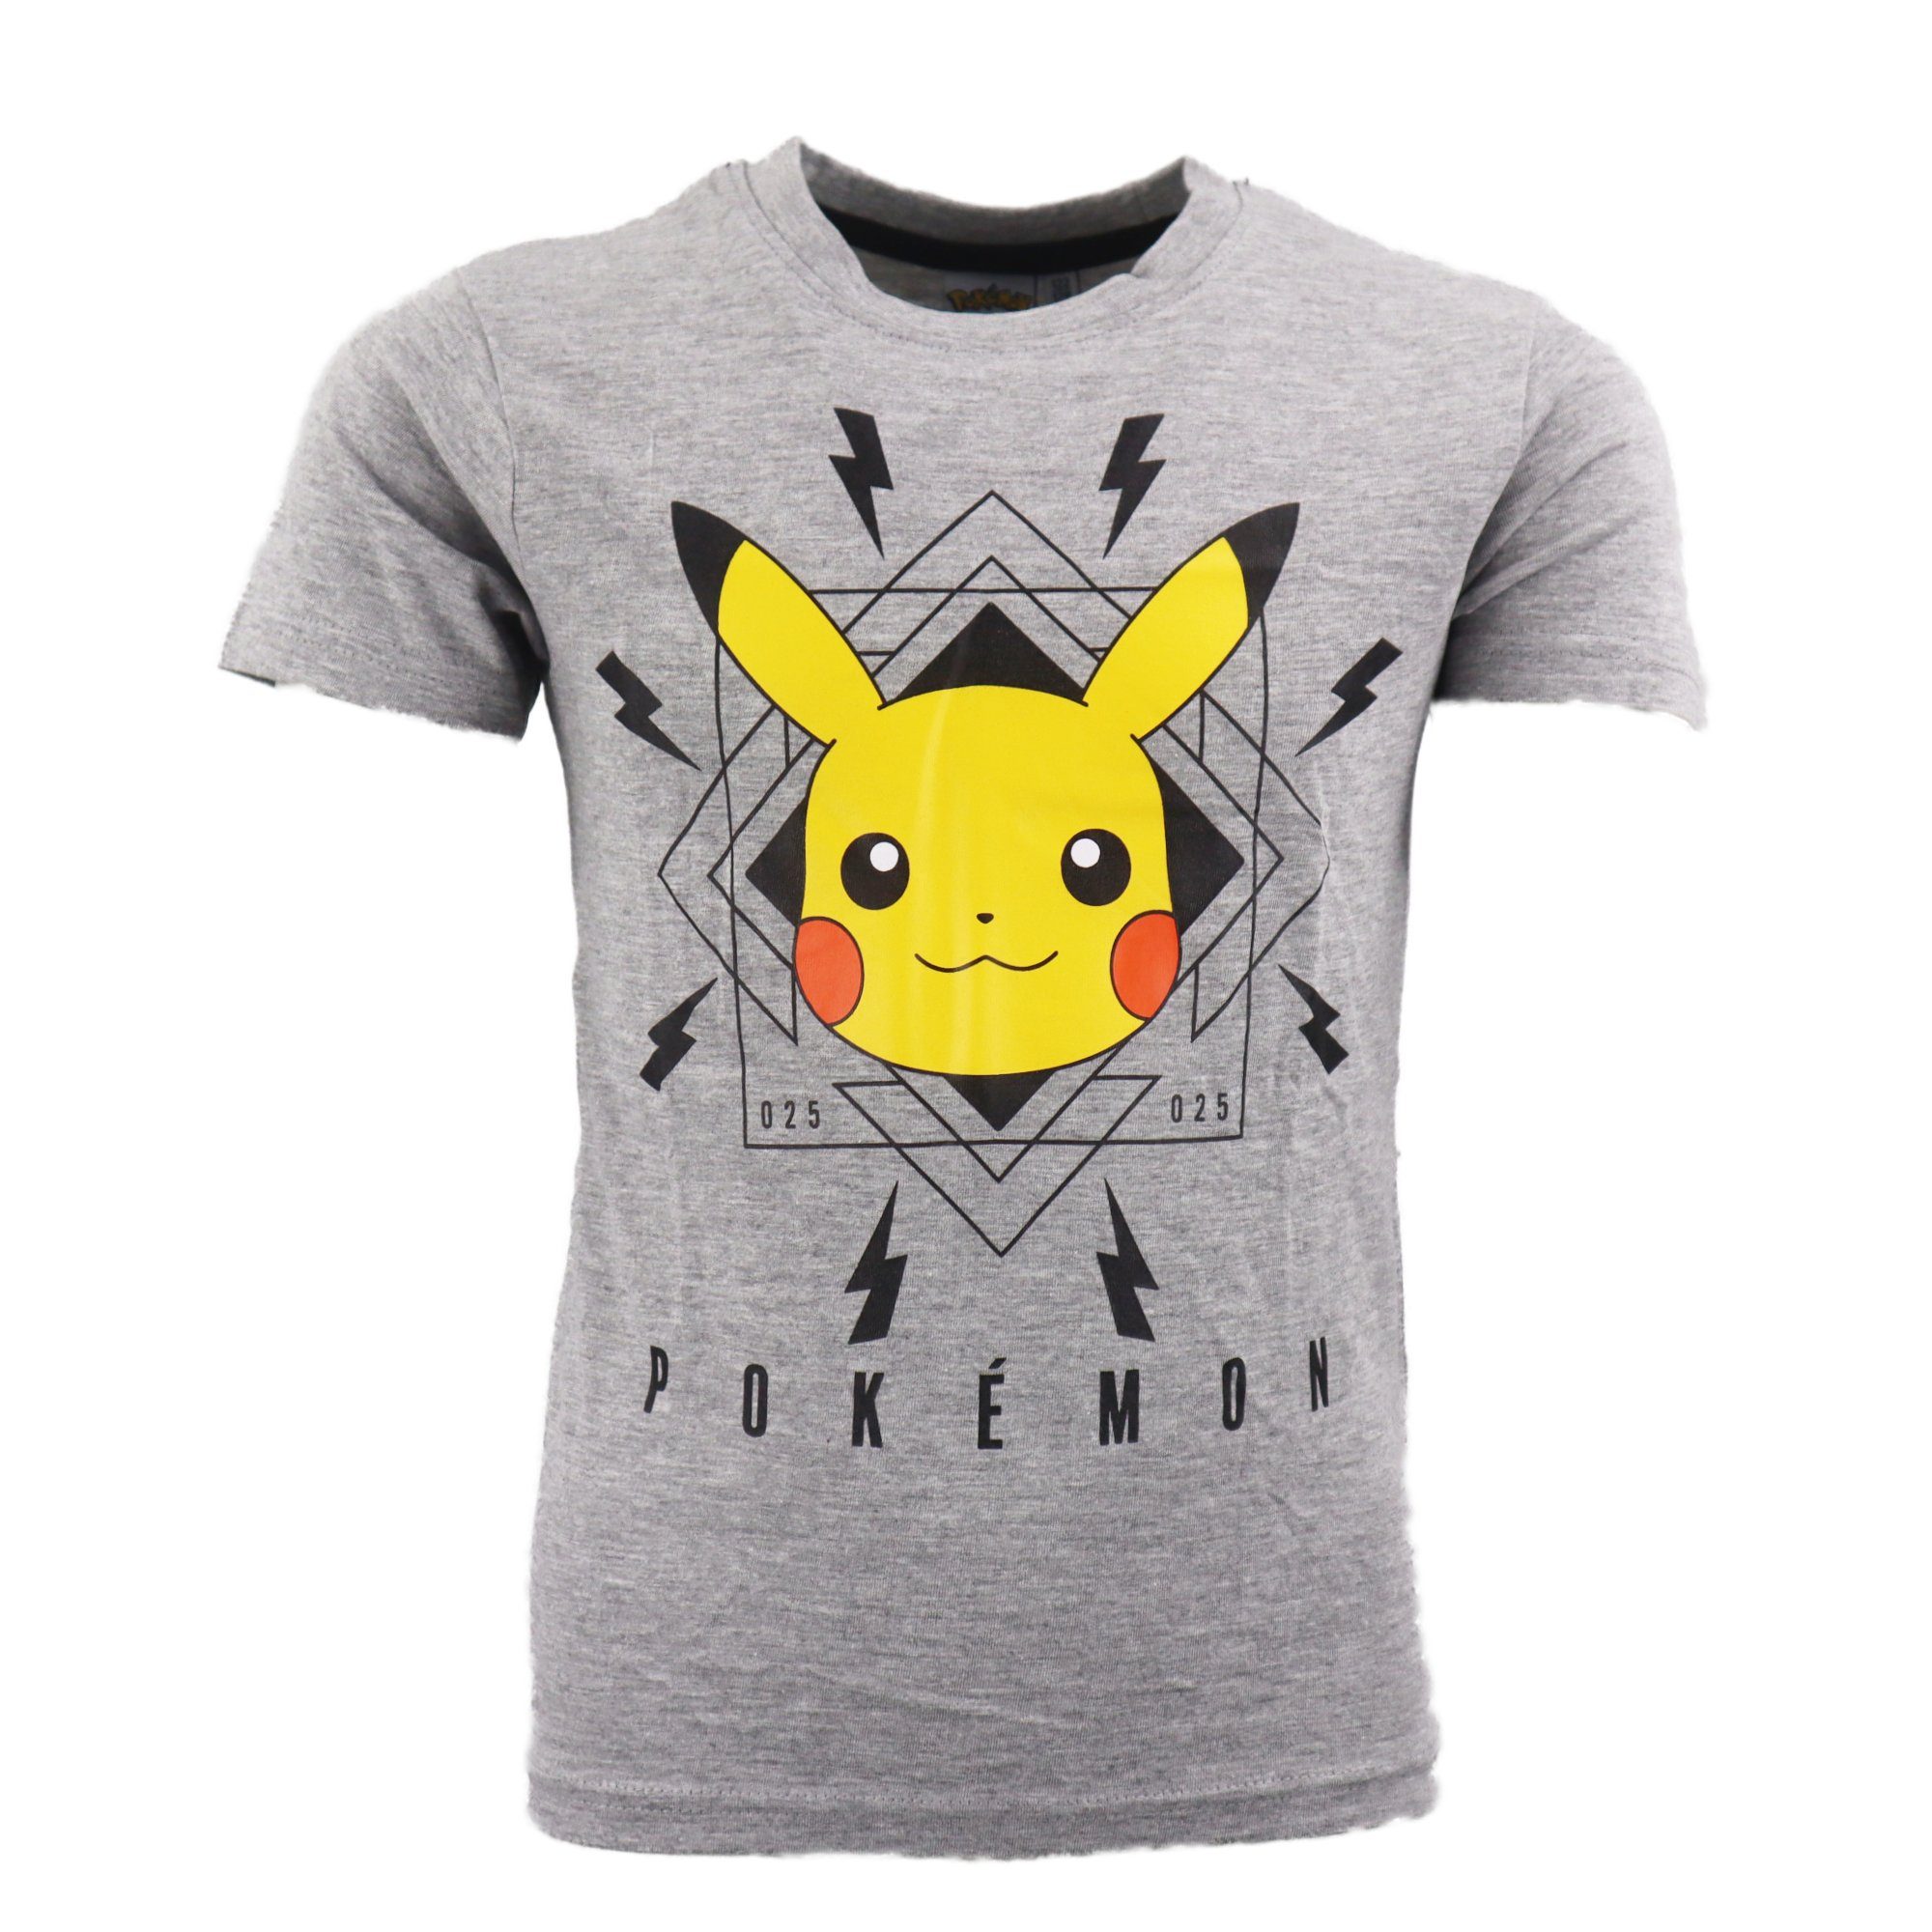 POKÉMON T-Shirt Pokemon Pikachu Jungen Kinder Shirt Gr. 110 bis 152, Schwarz oder Grau